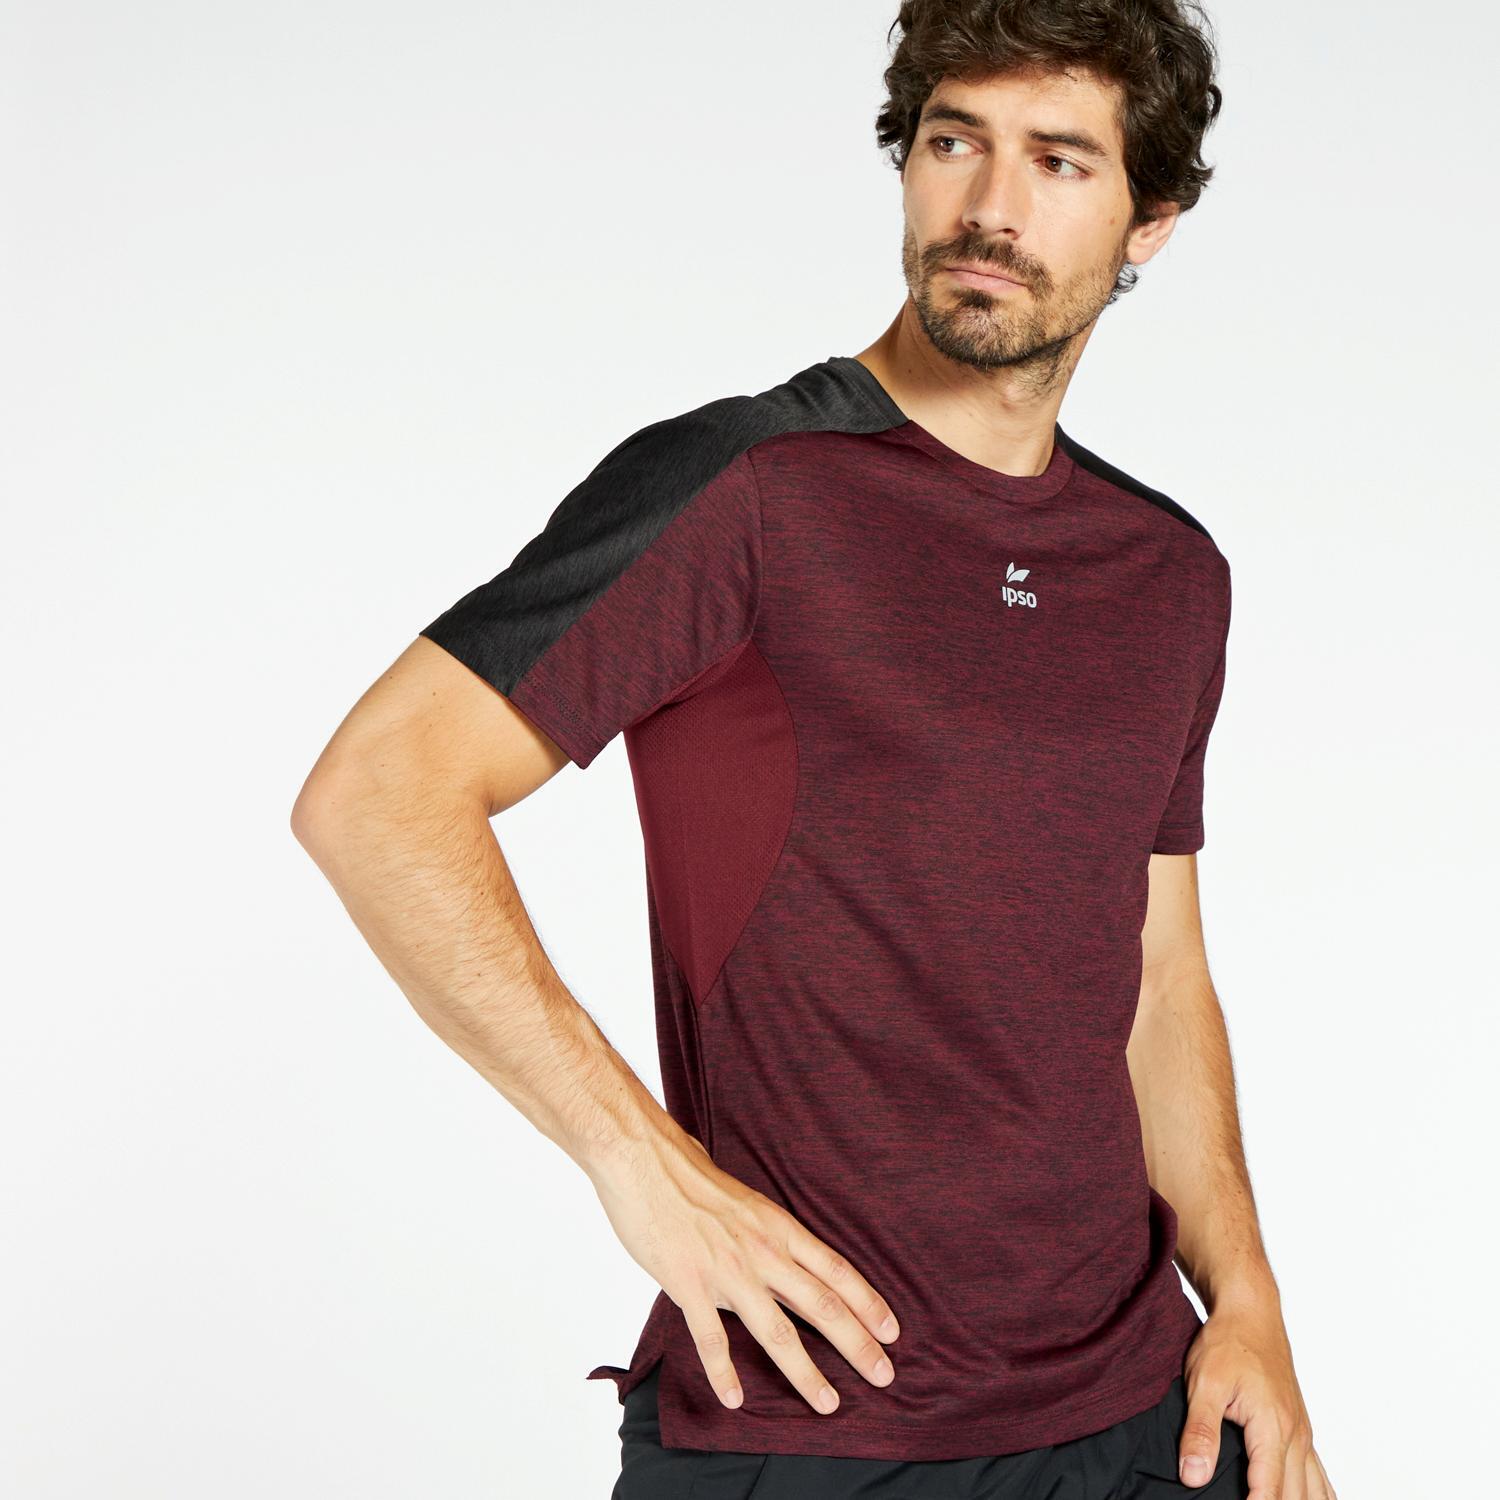 Combi 2 Cro Camiseta M/c Running Drytec - ROUGE sports taille 2XL